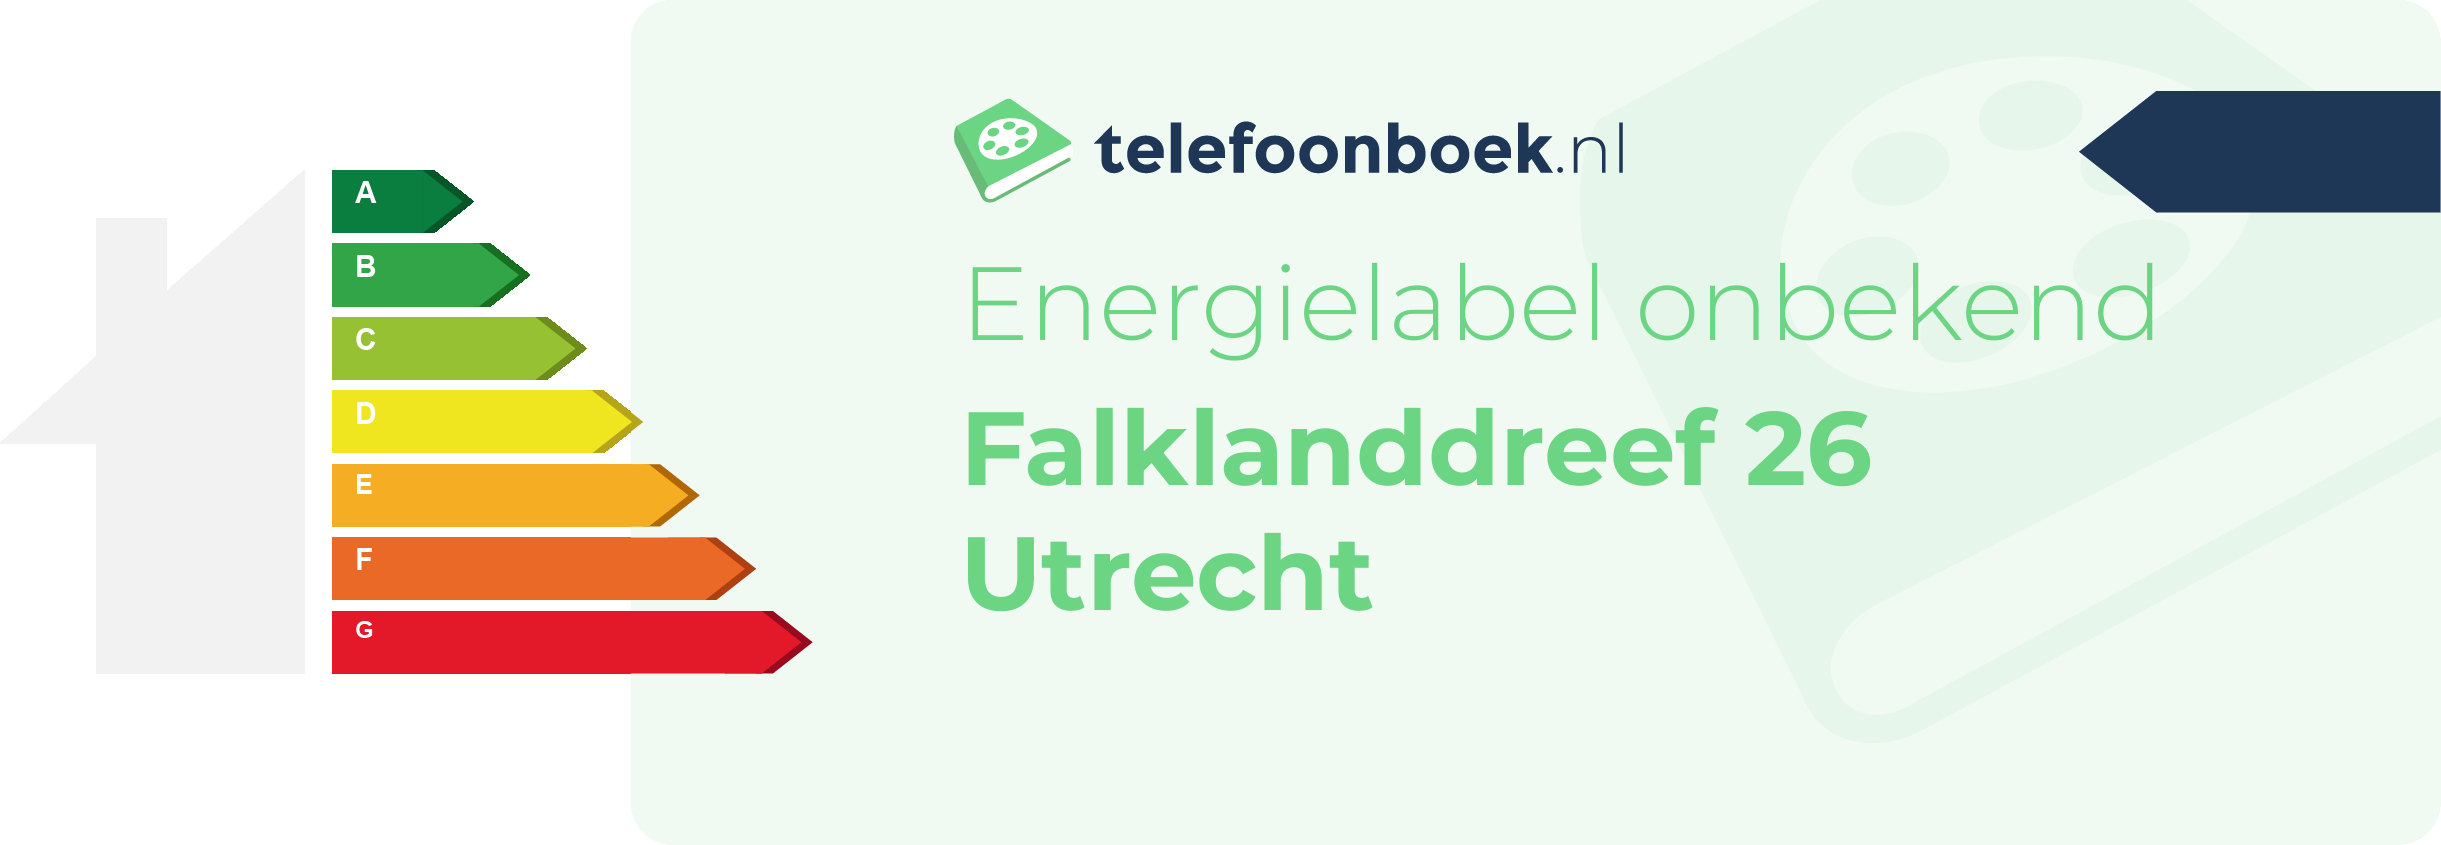 Energielabel Falklanddreef 26 Utrecht